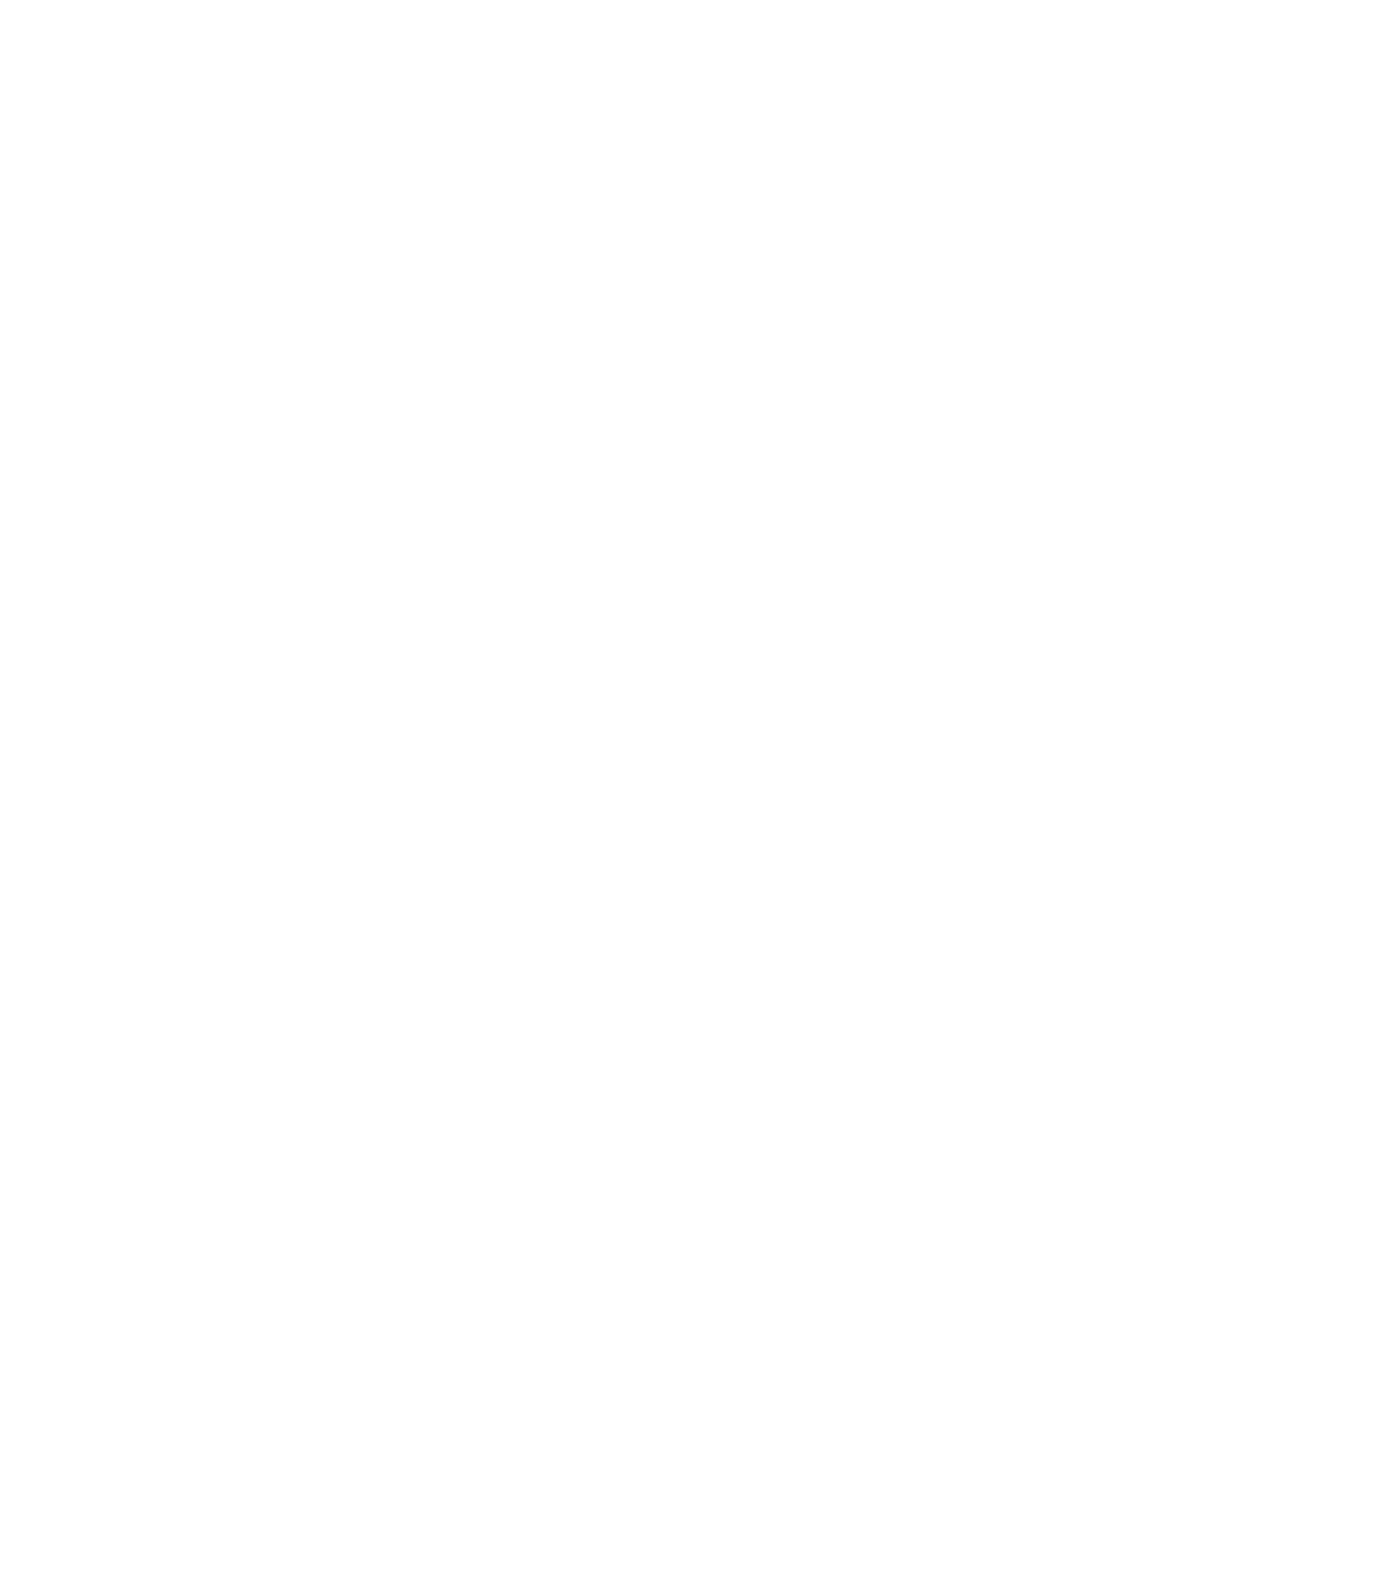 Meggitt logo for dark backgrounds (transparent PNG)